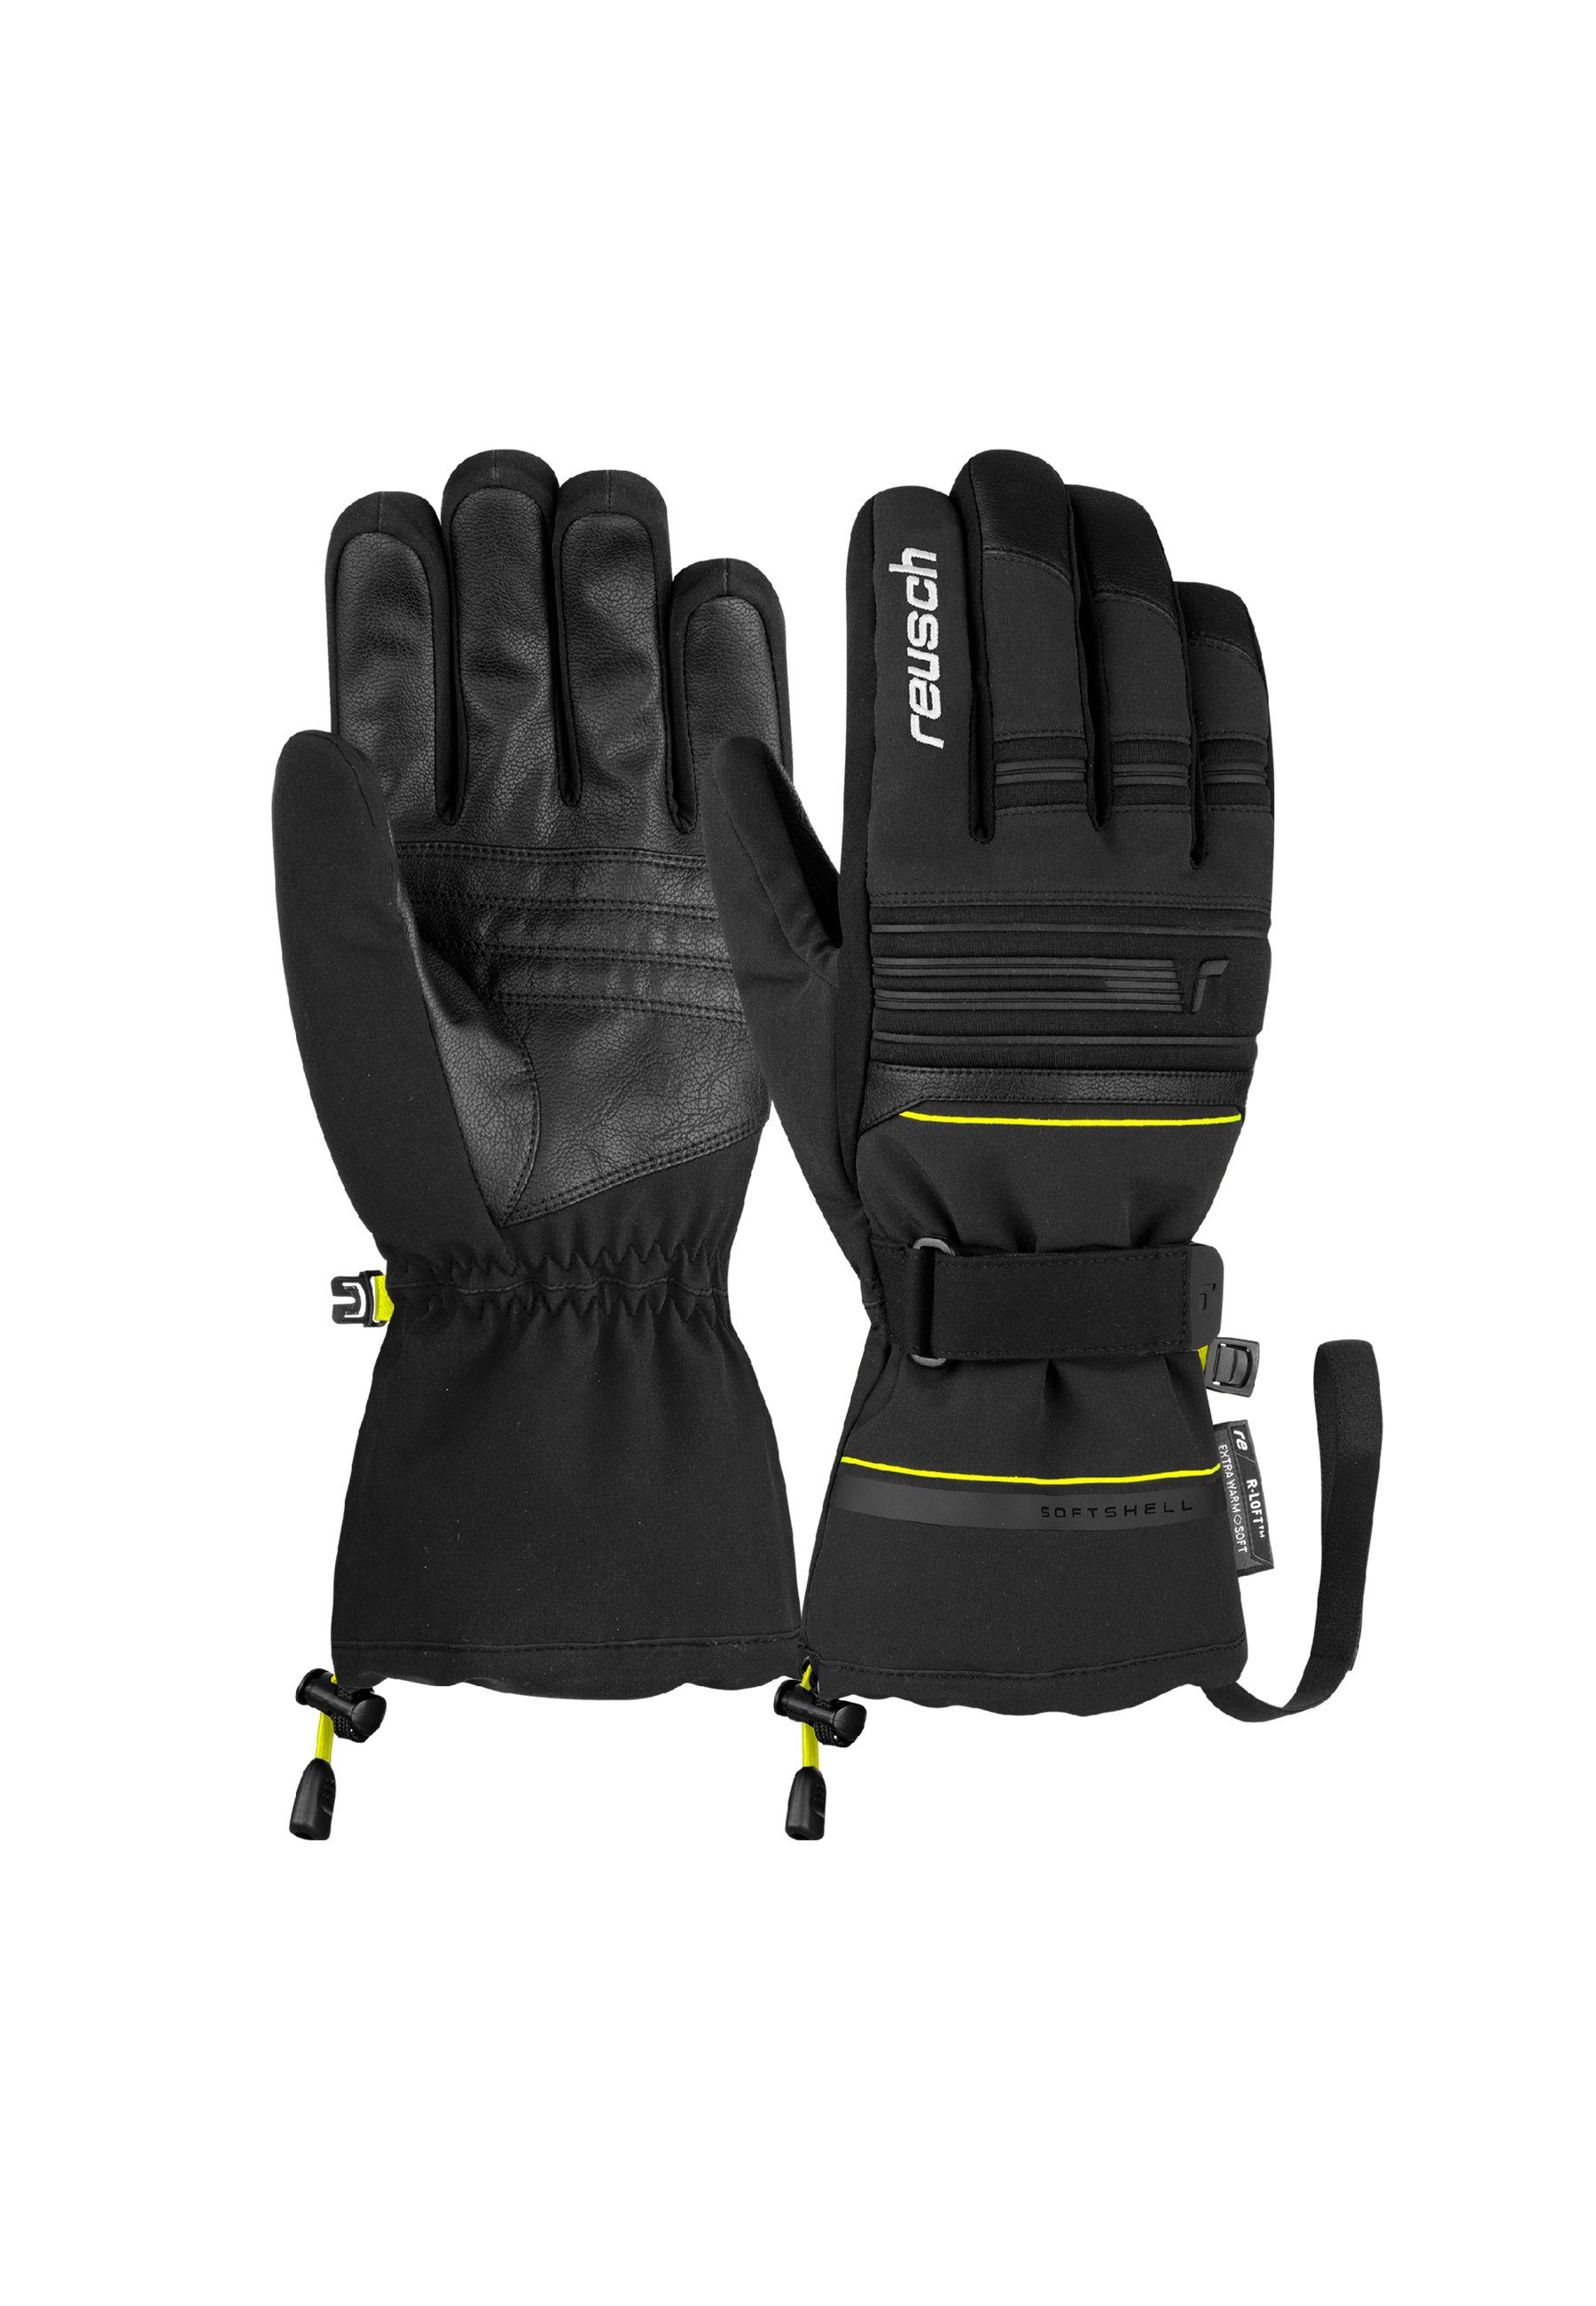 R-TEX® gelb-schwarz atmungsaktivem in Kondor Skihandschuhe Design XT wasserdichtem Reusch und